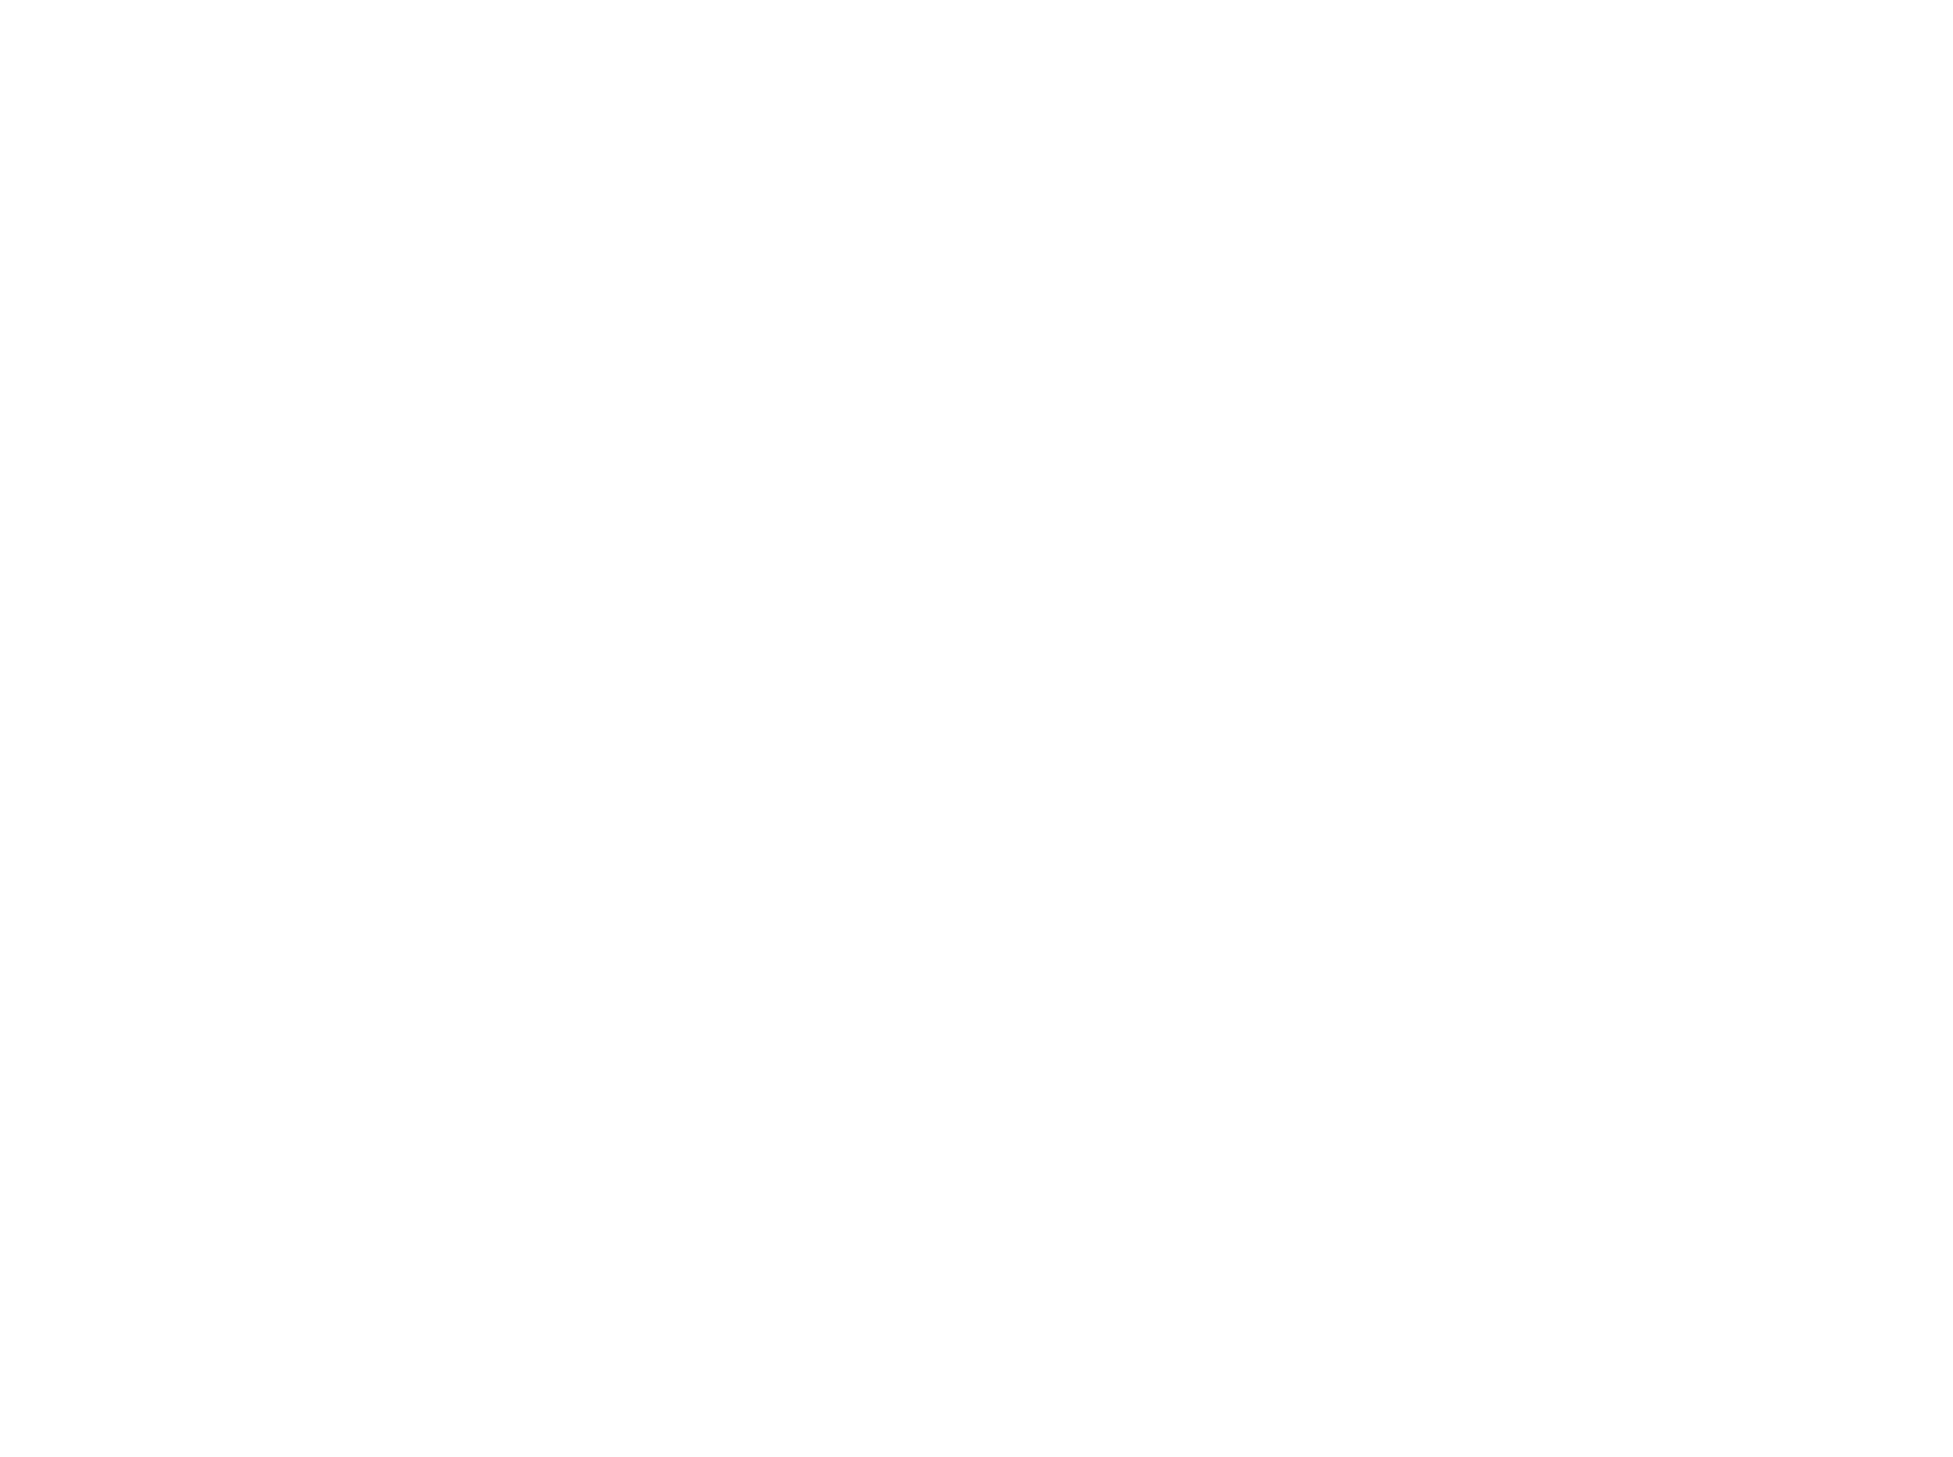 LyricsPy